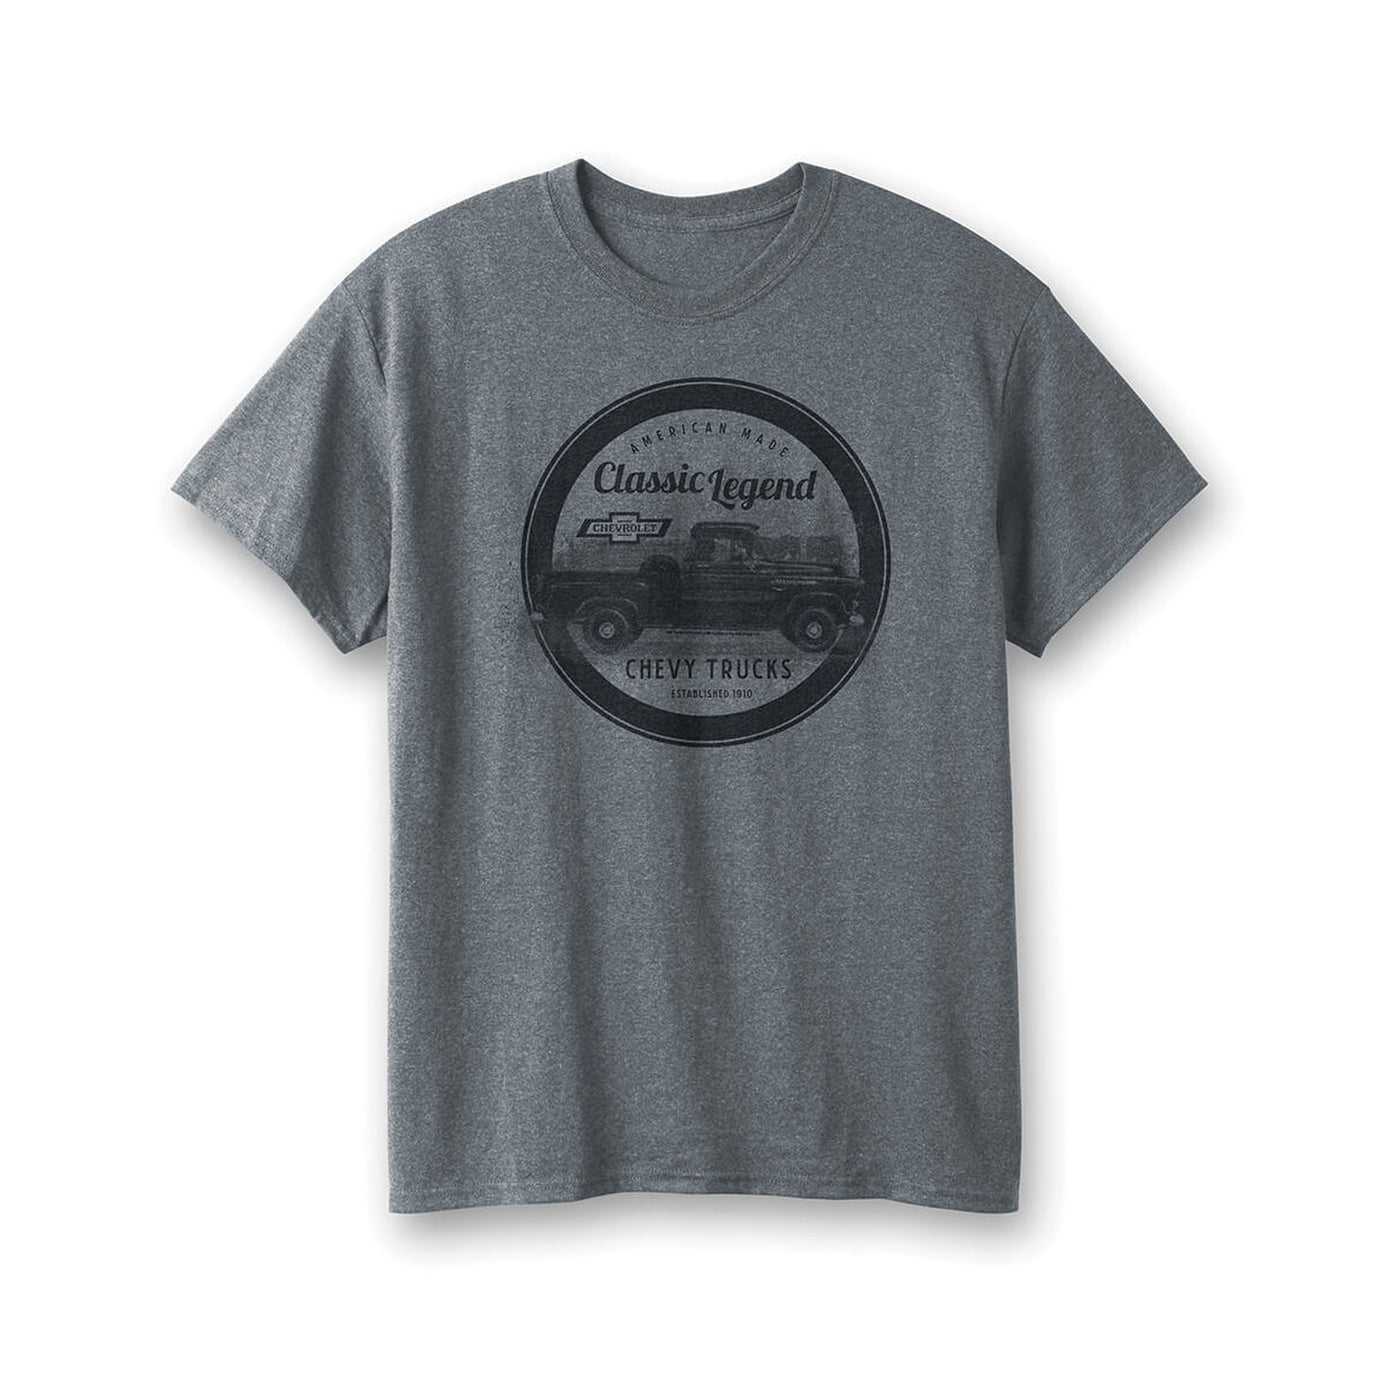 Chevrolet Classic Legend T-Shirt